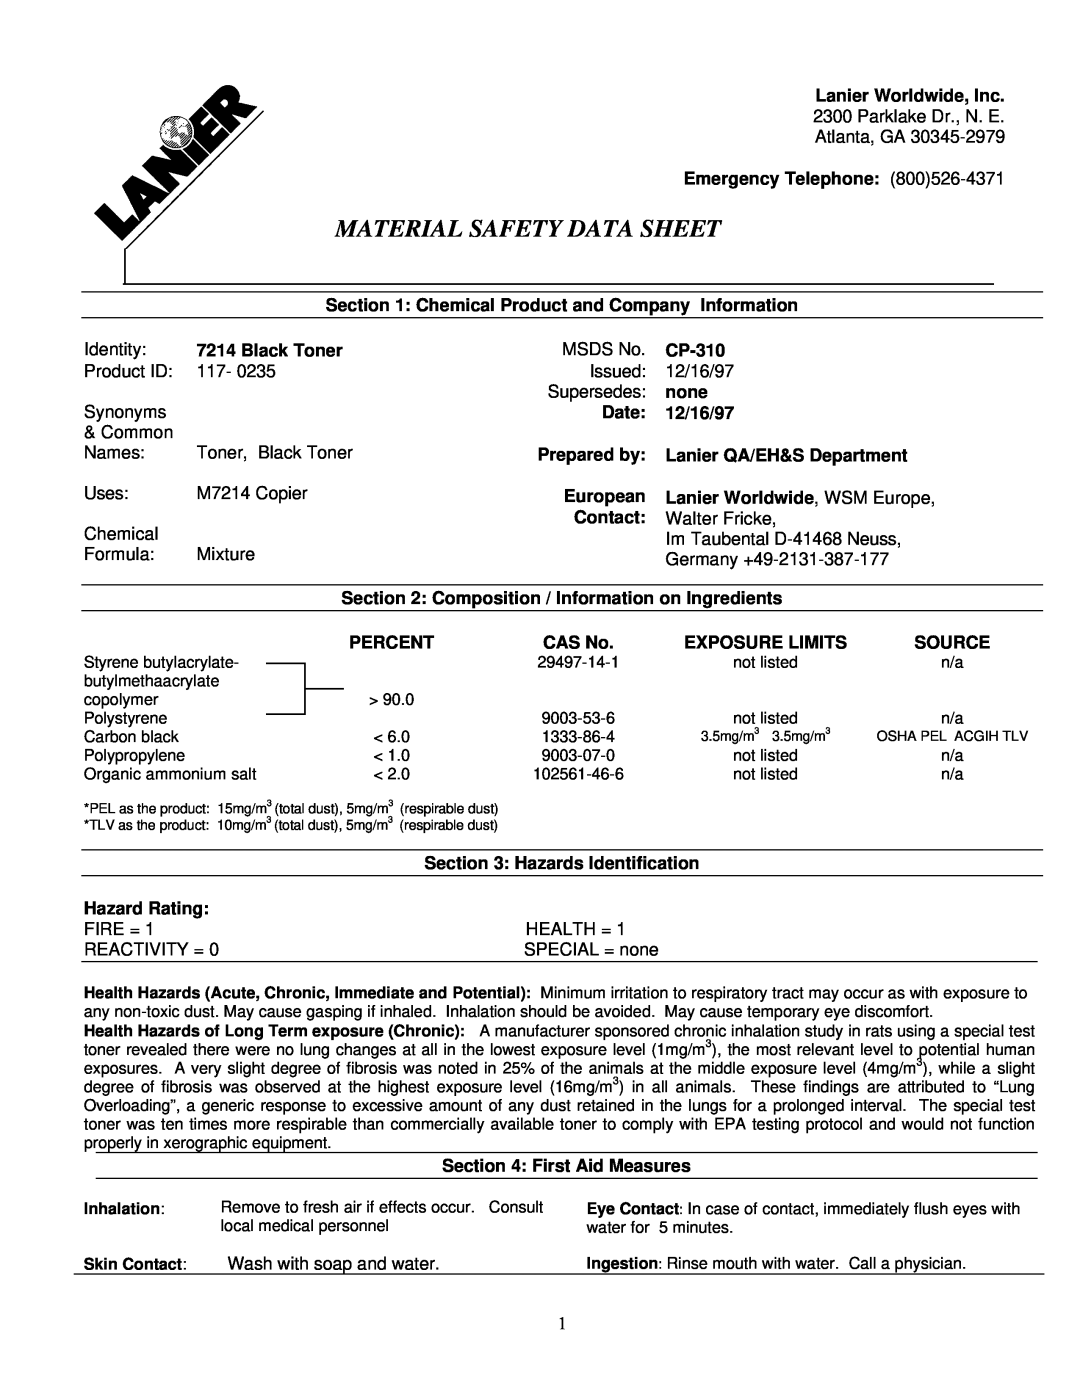 Lanier DF-4 manual Material Safety Data Sheet 